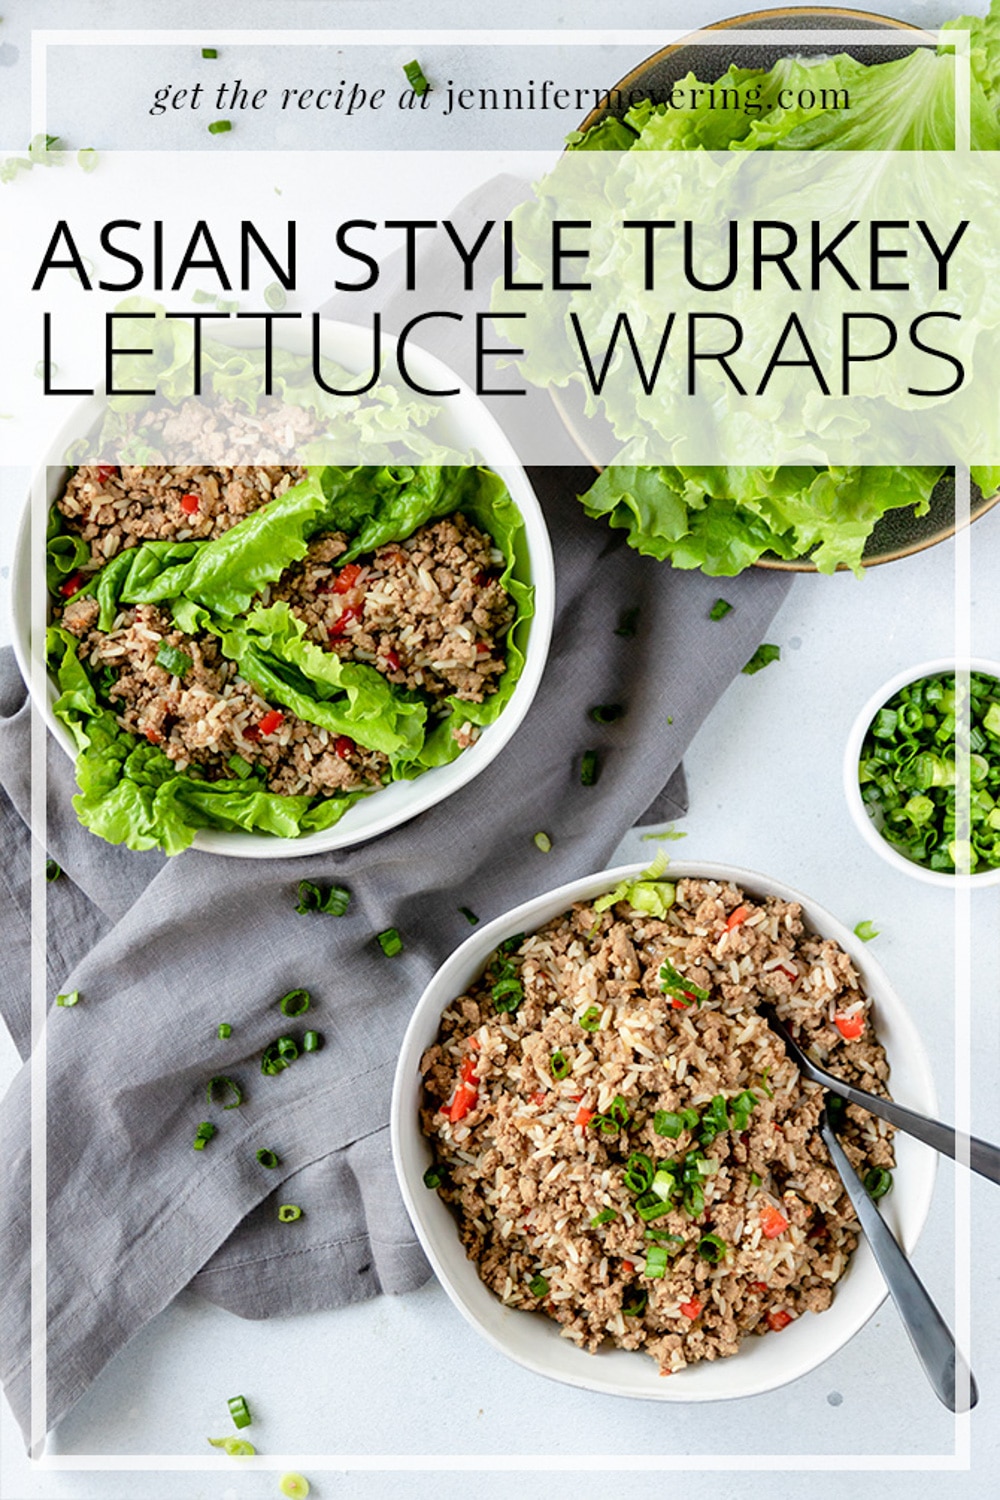 Asian Style Turkey Lettuce Wraps - JenniferMeyering.com